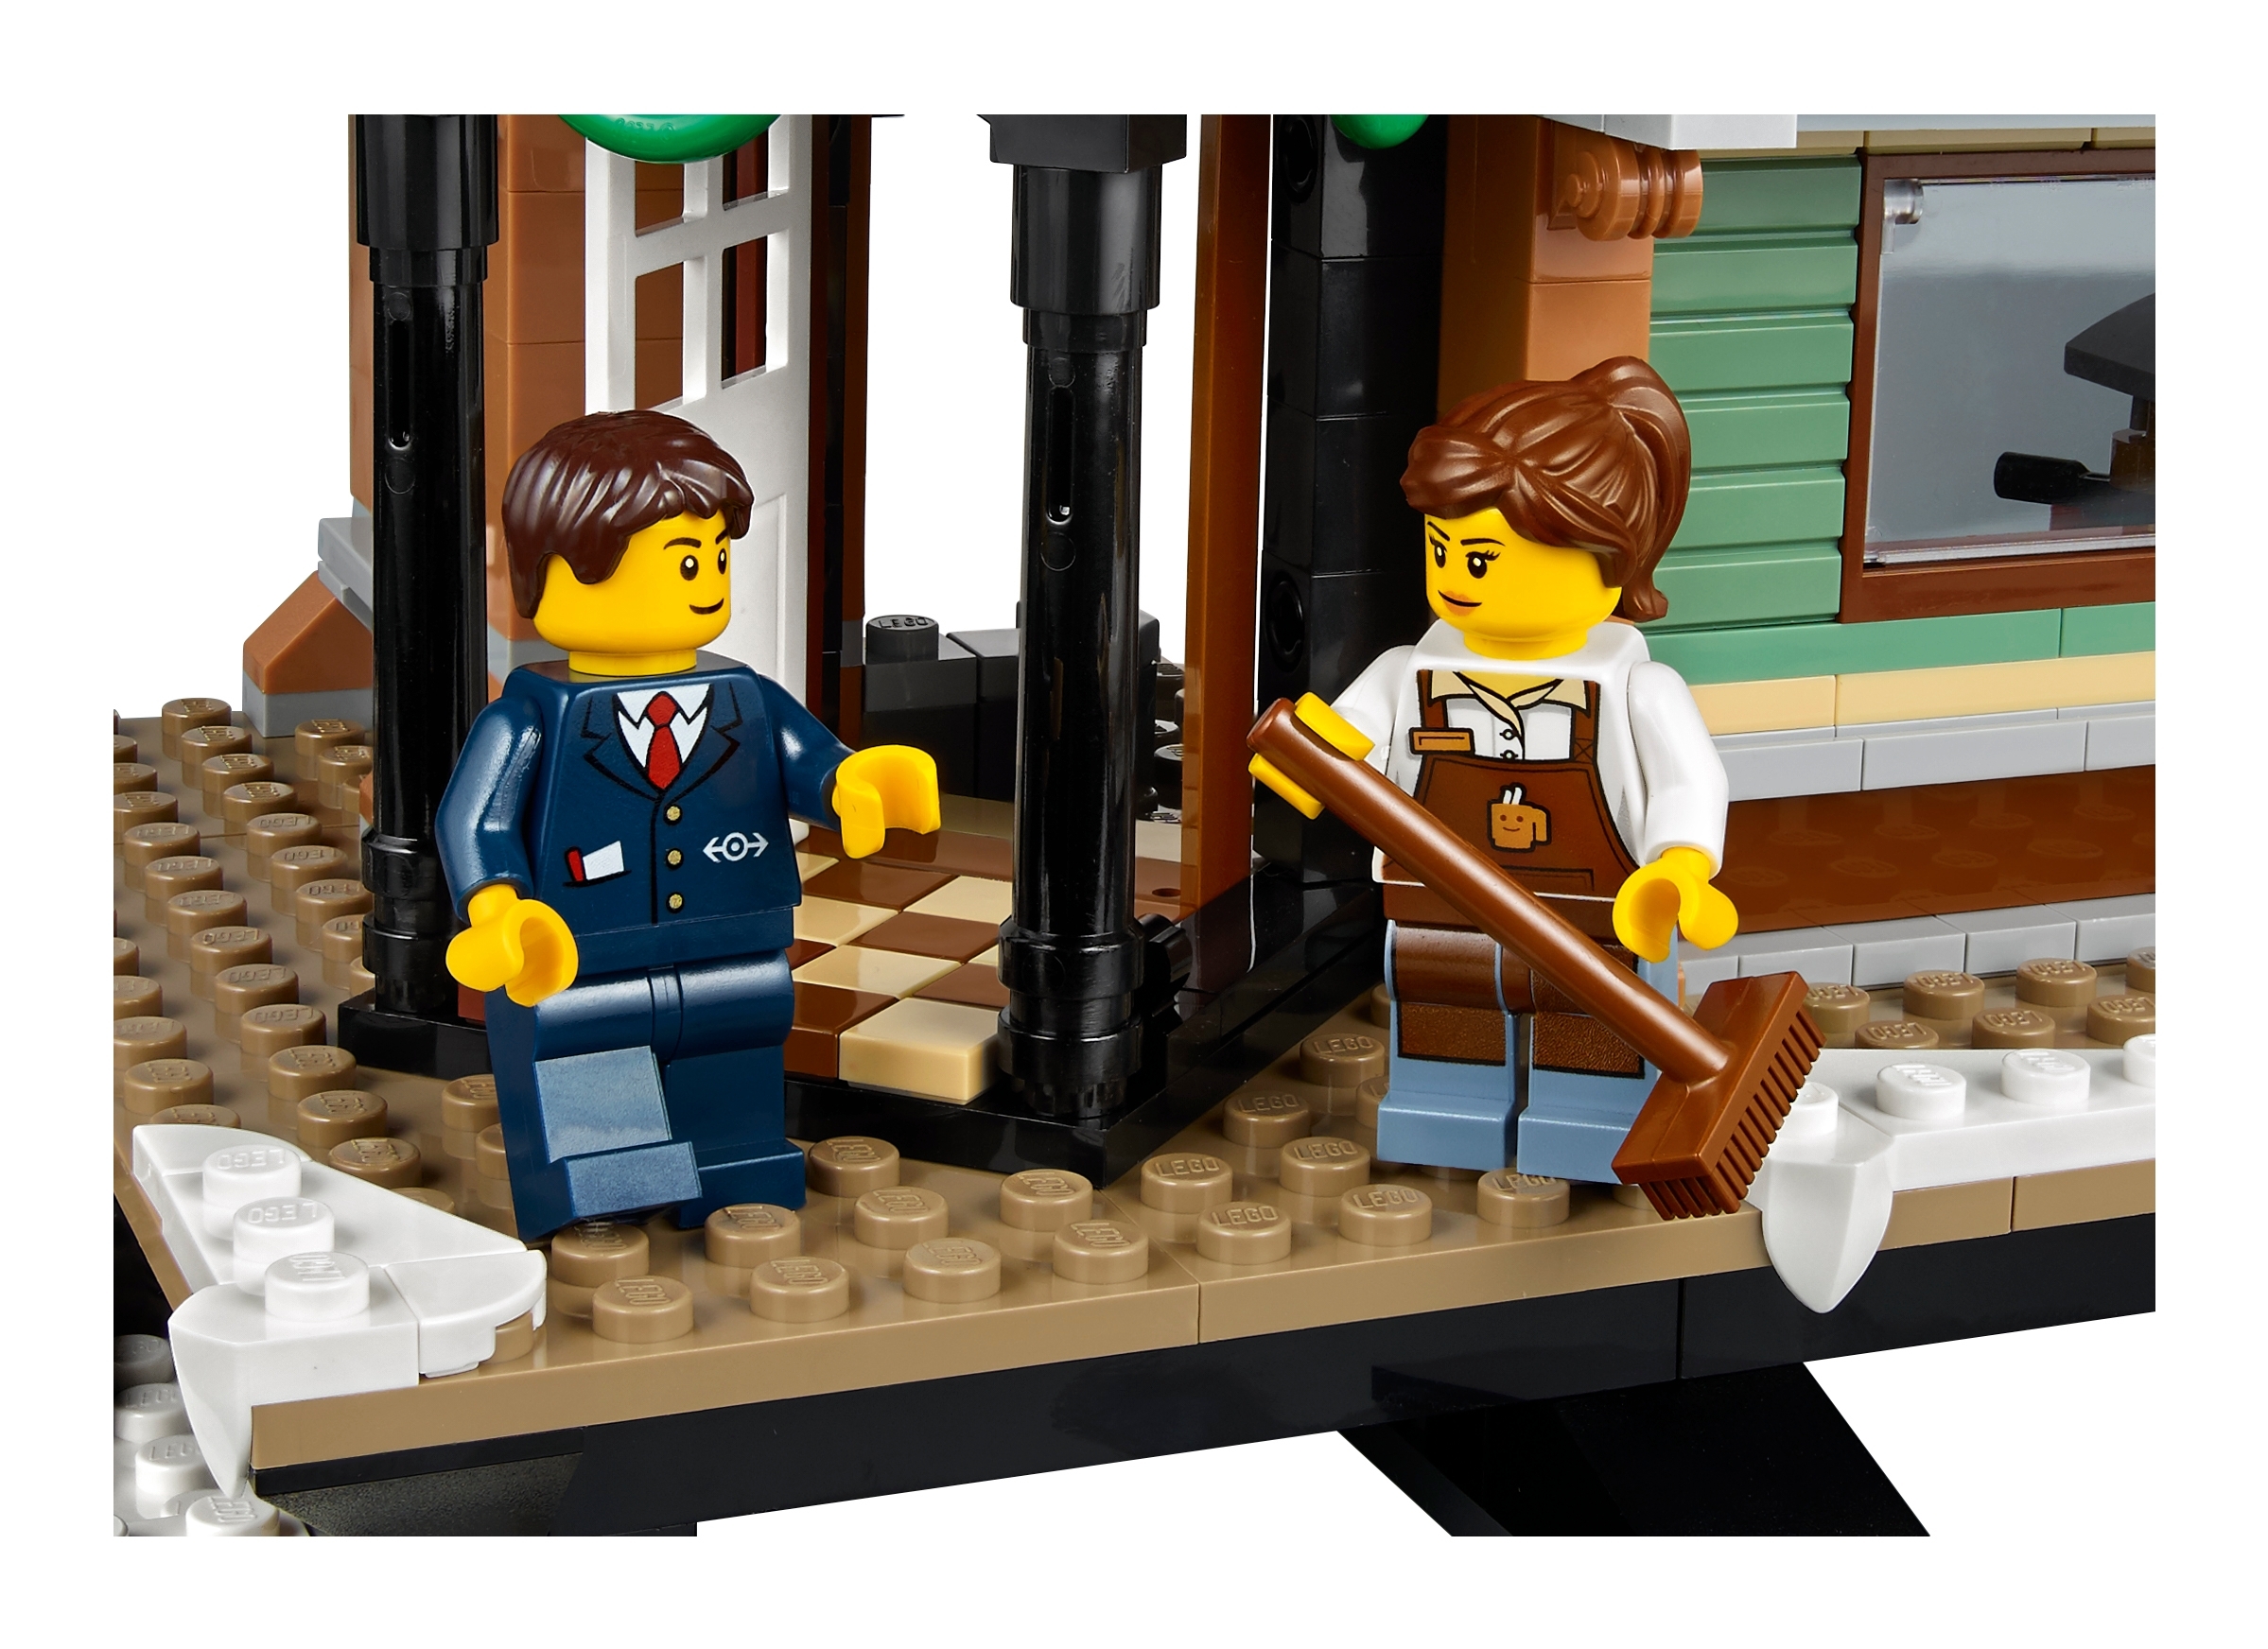 gispende trofast Breddegrad Winter Village Station 10259 | Creator Expert | Buy online at the Official  LEGO® Shop US